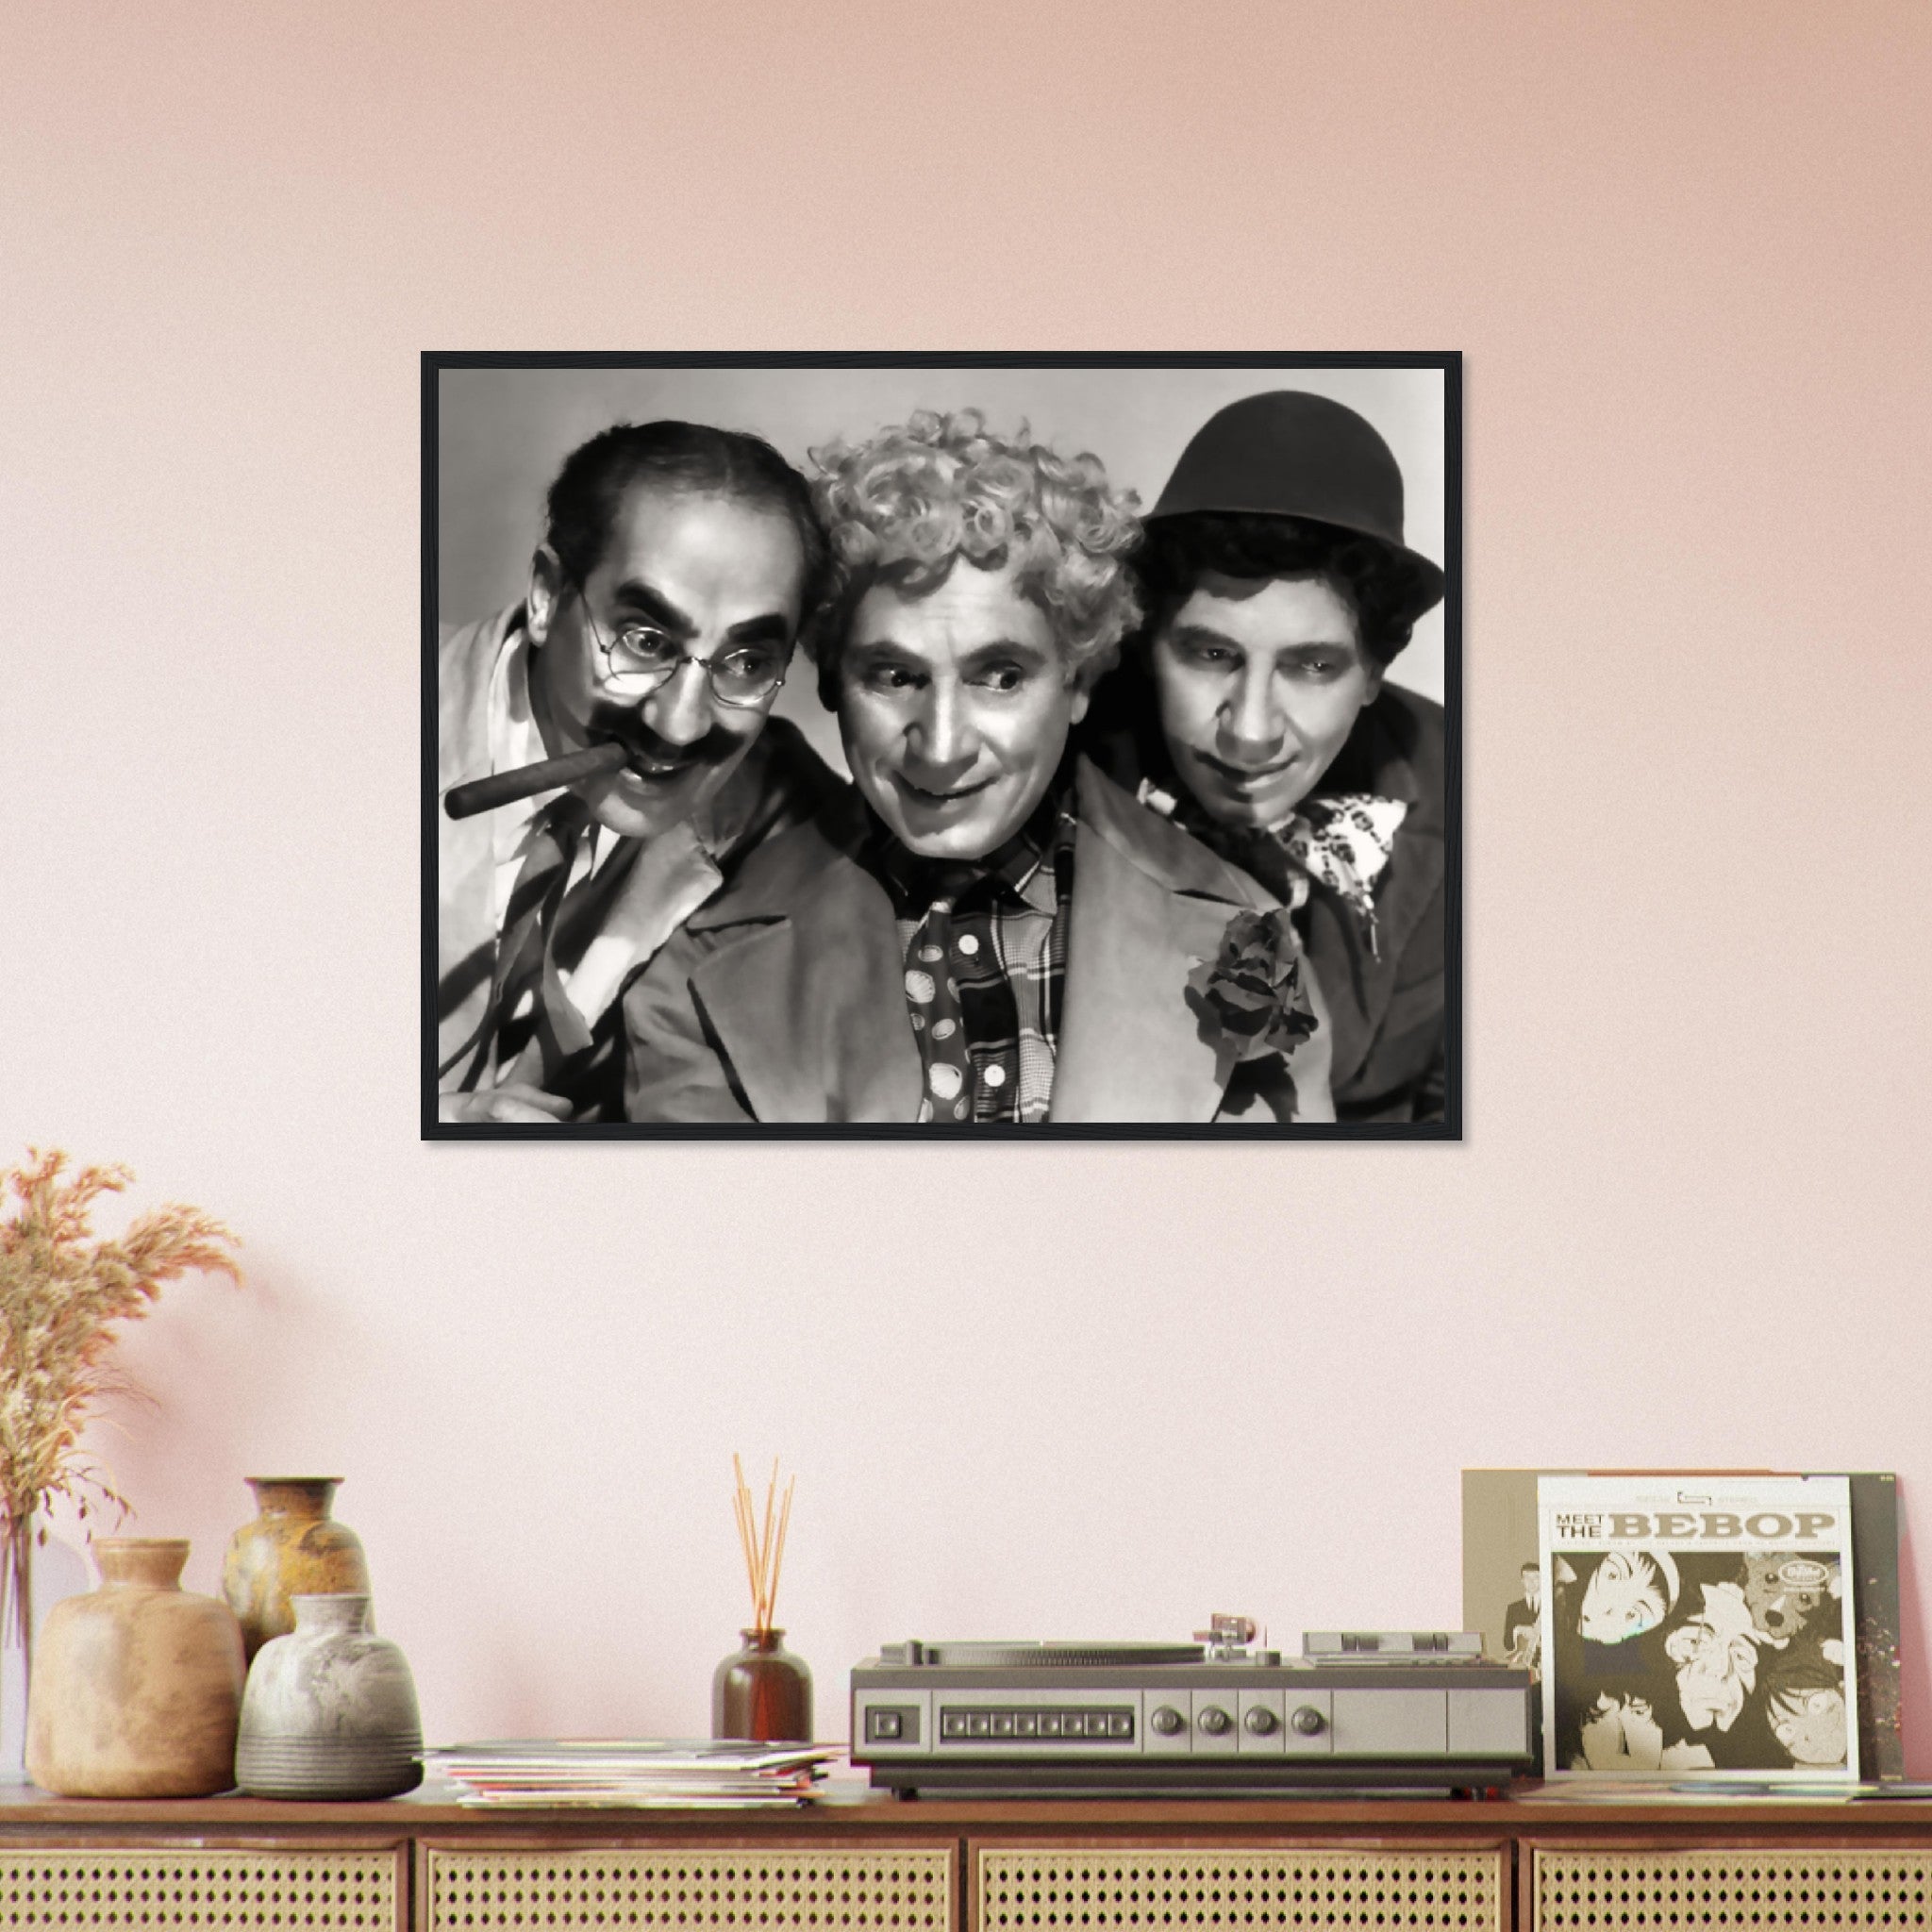 Marx Brothers Framed, Vintage Photo - Iconic Marx Brothers Framed Print - Groucho, Harpo, And Chico Marx - WallArtPrints4U